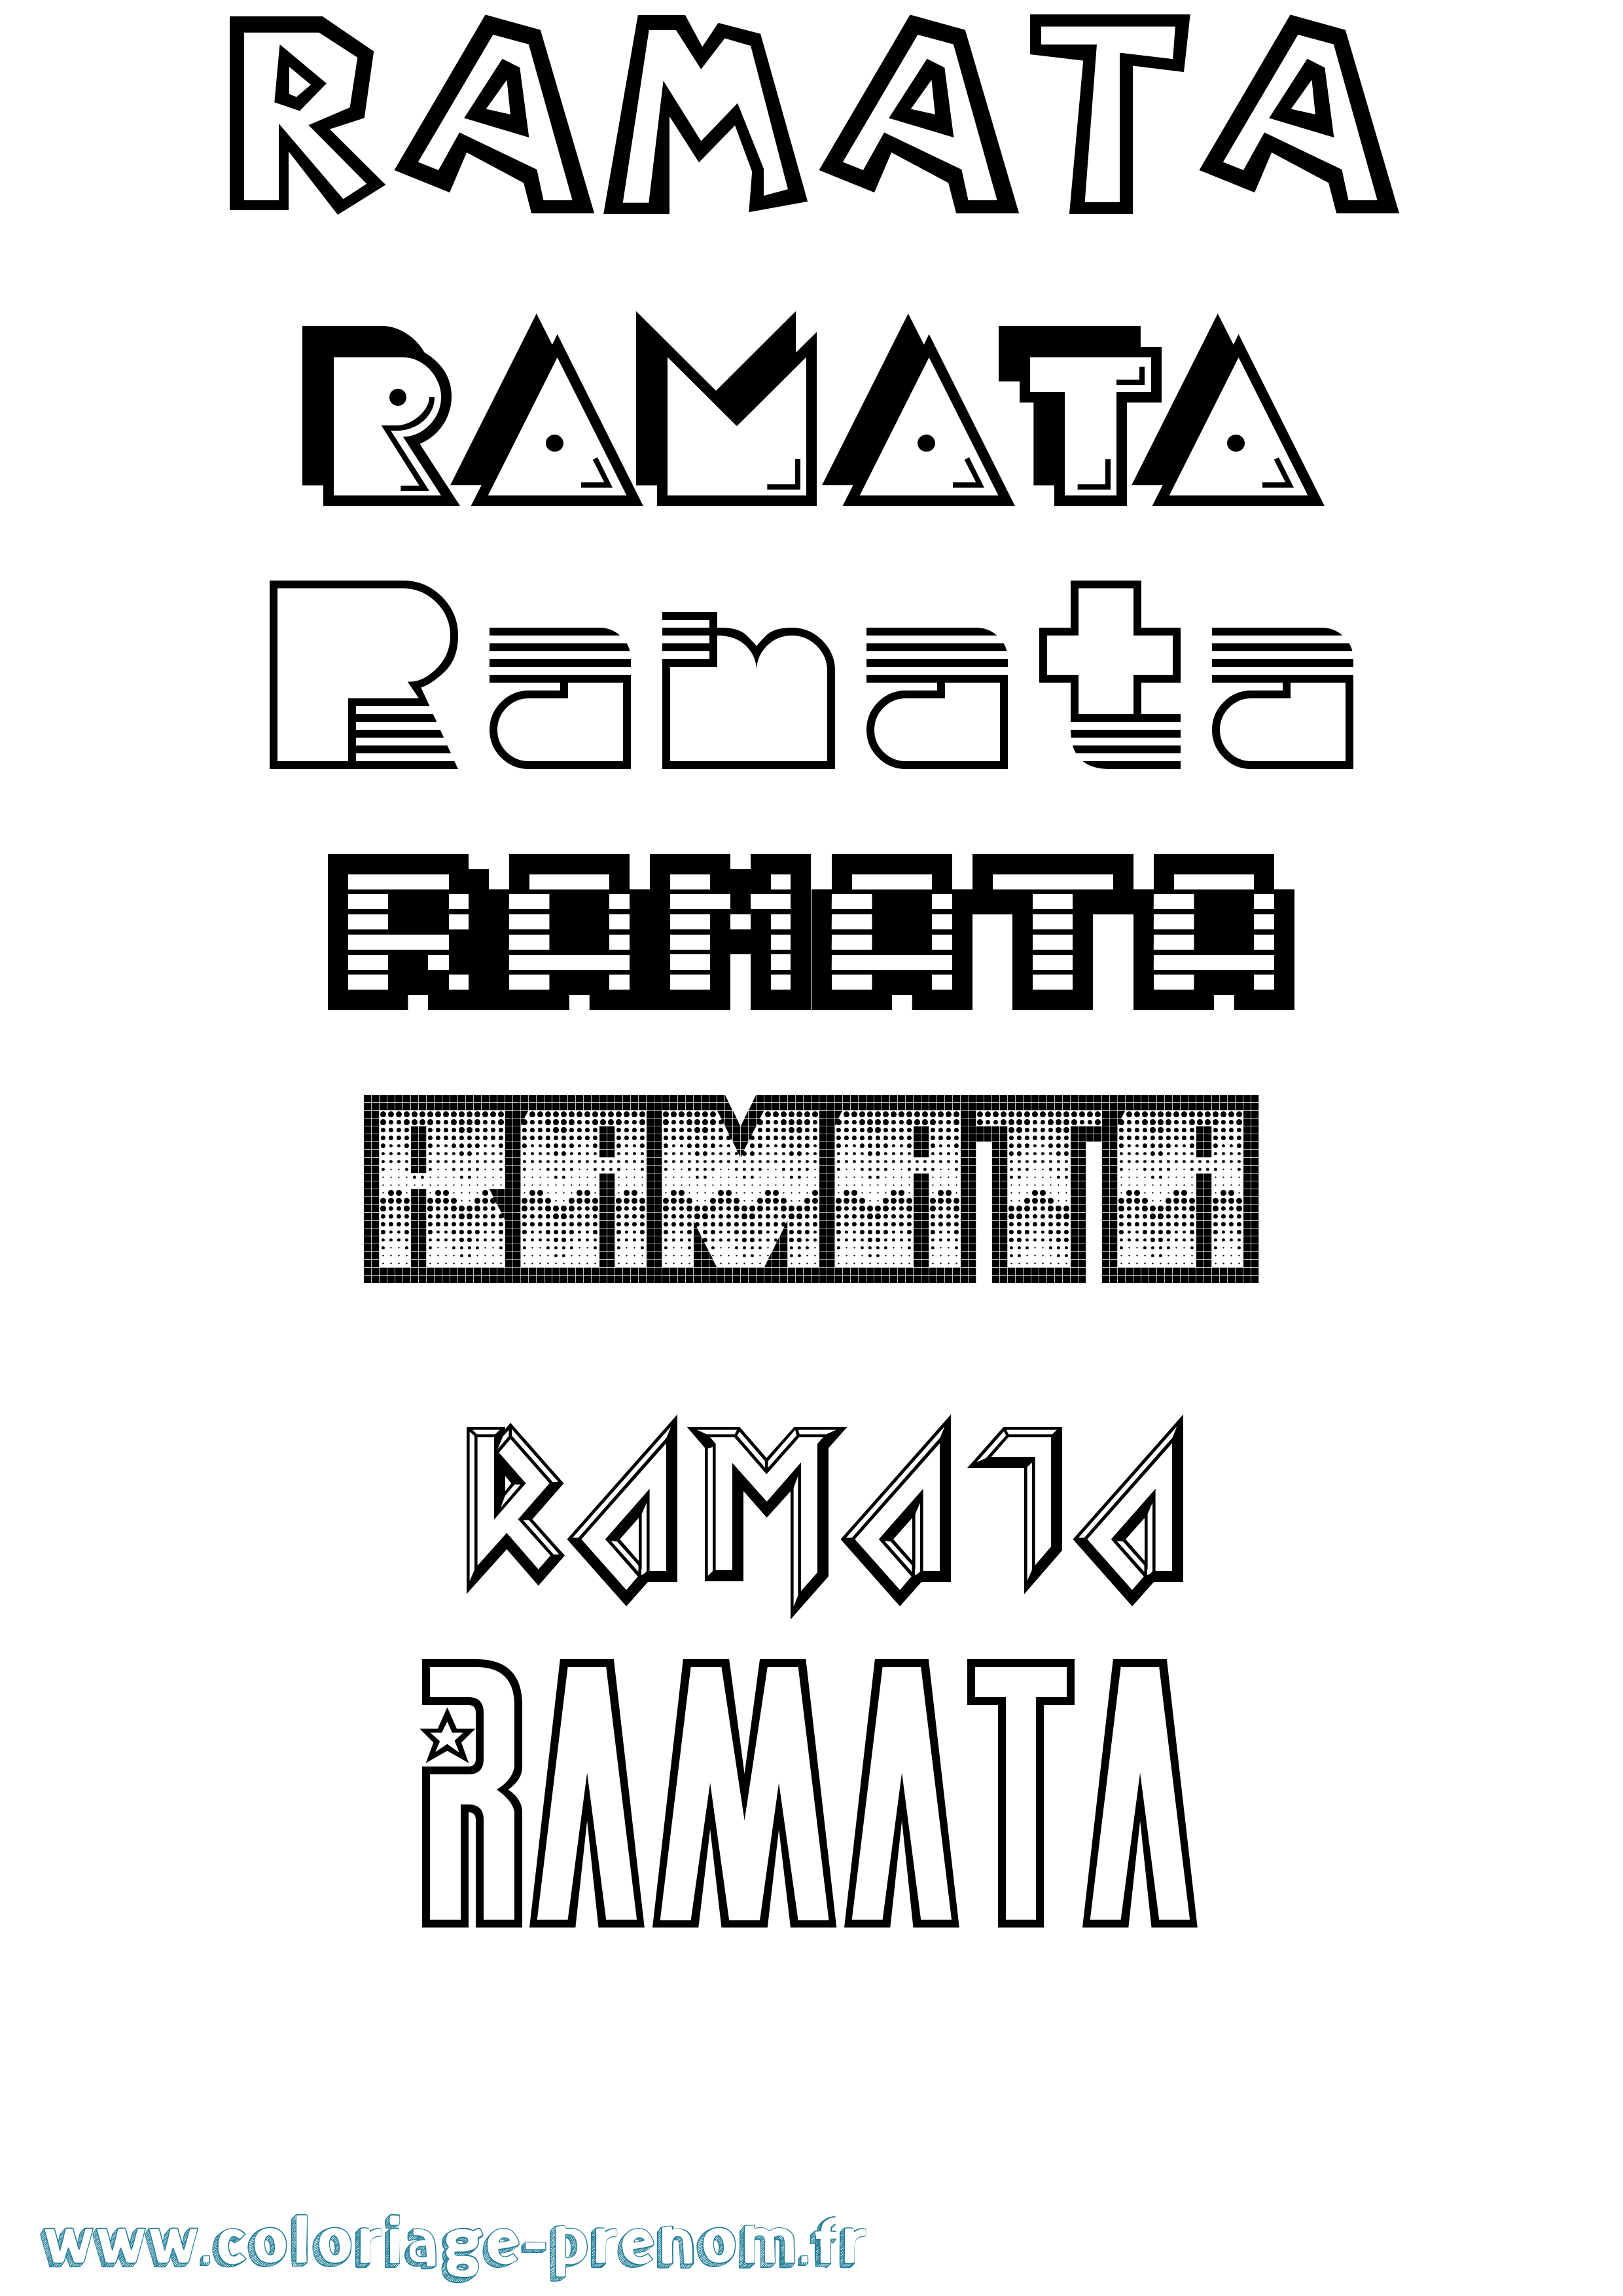 Coloriage prénom Ramata